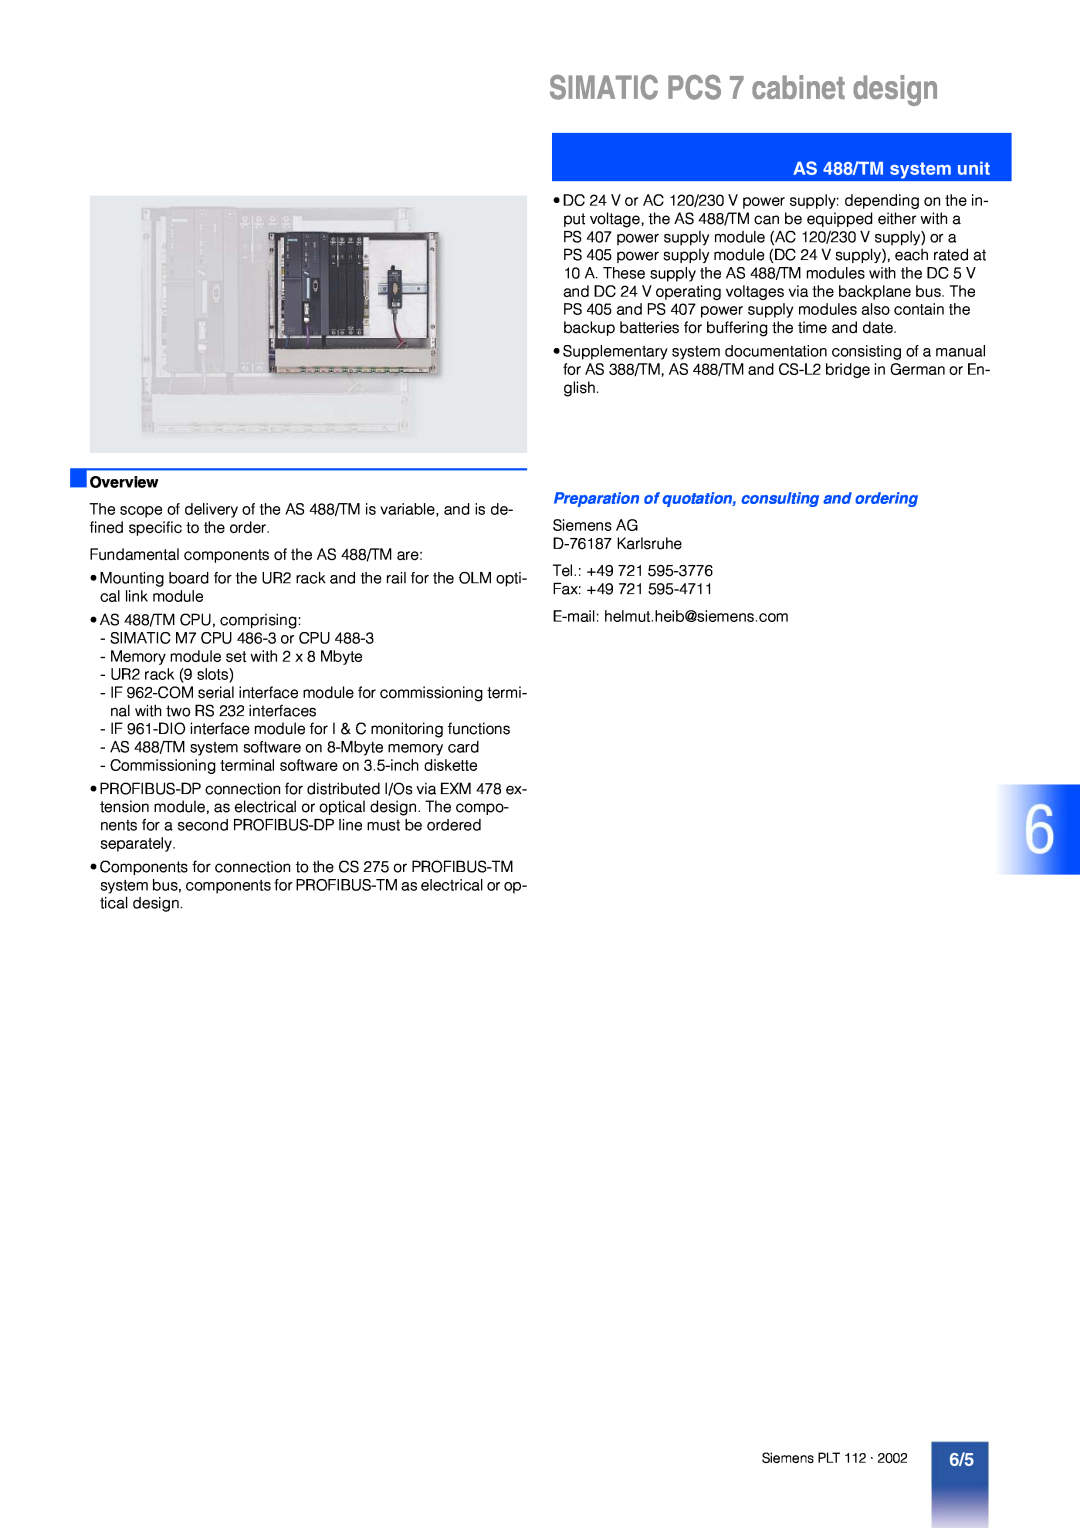 Siemens manual AS 488/TM system unit, SIMATIC PCS 7 cabinet design, Overview 